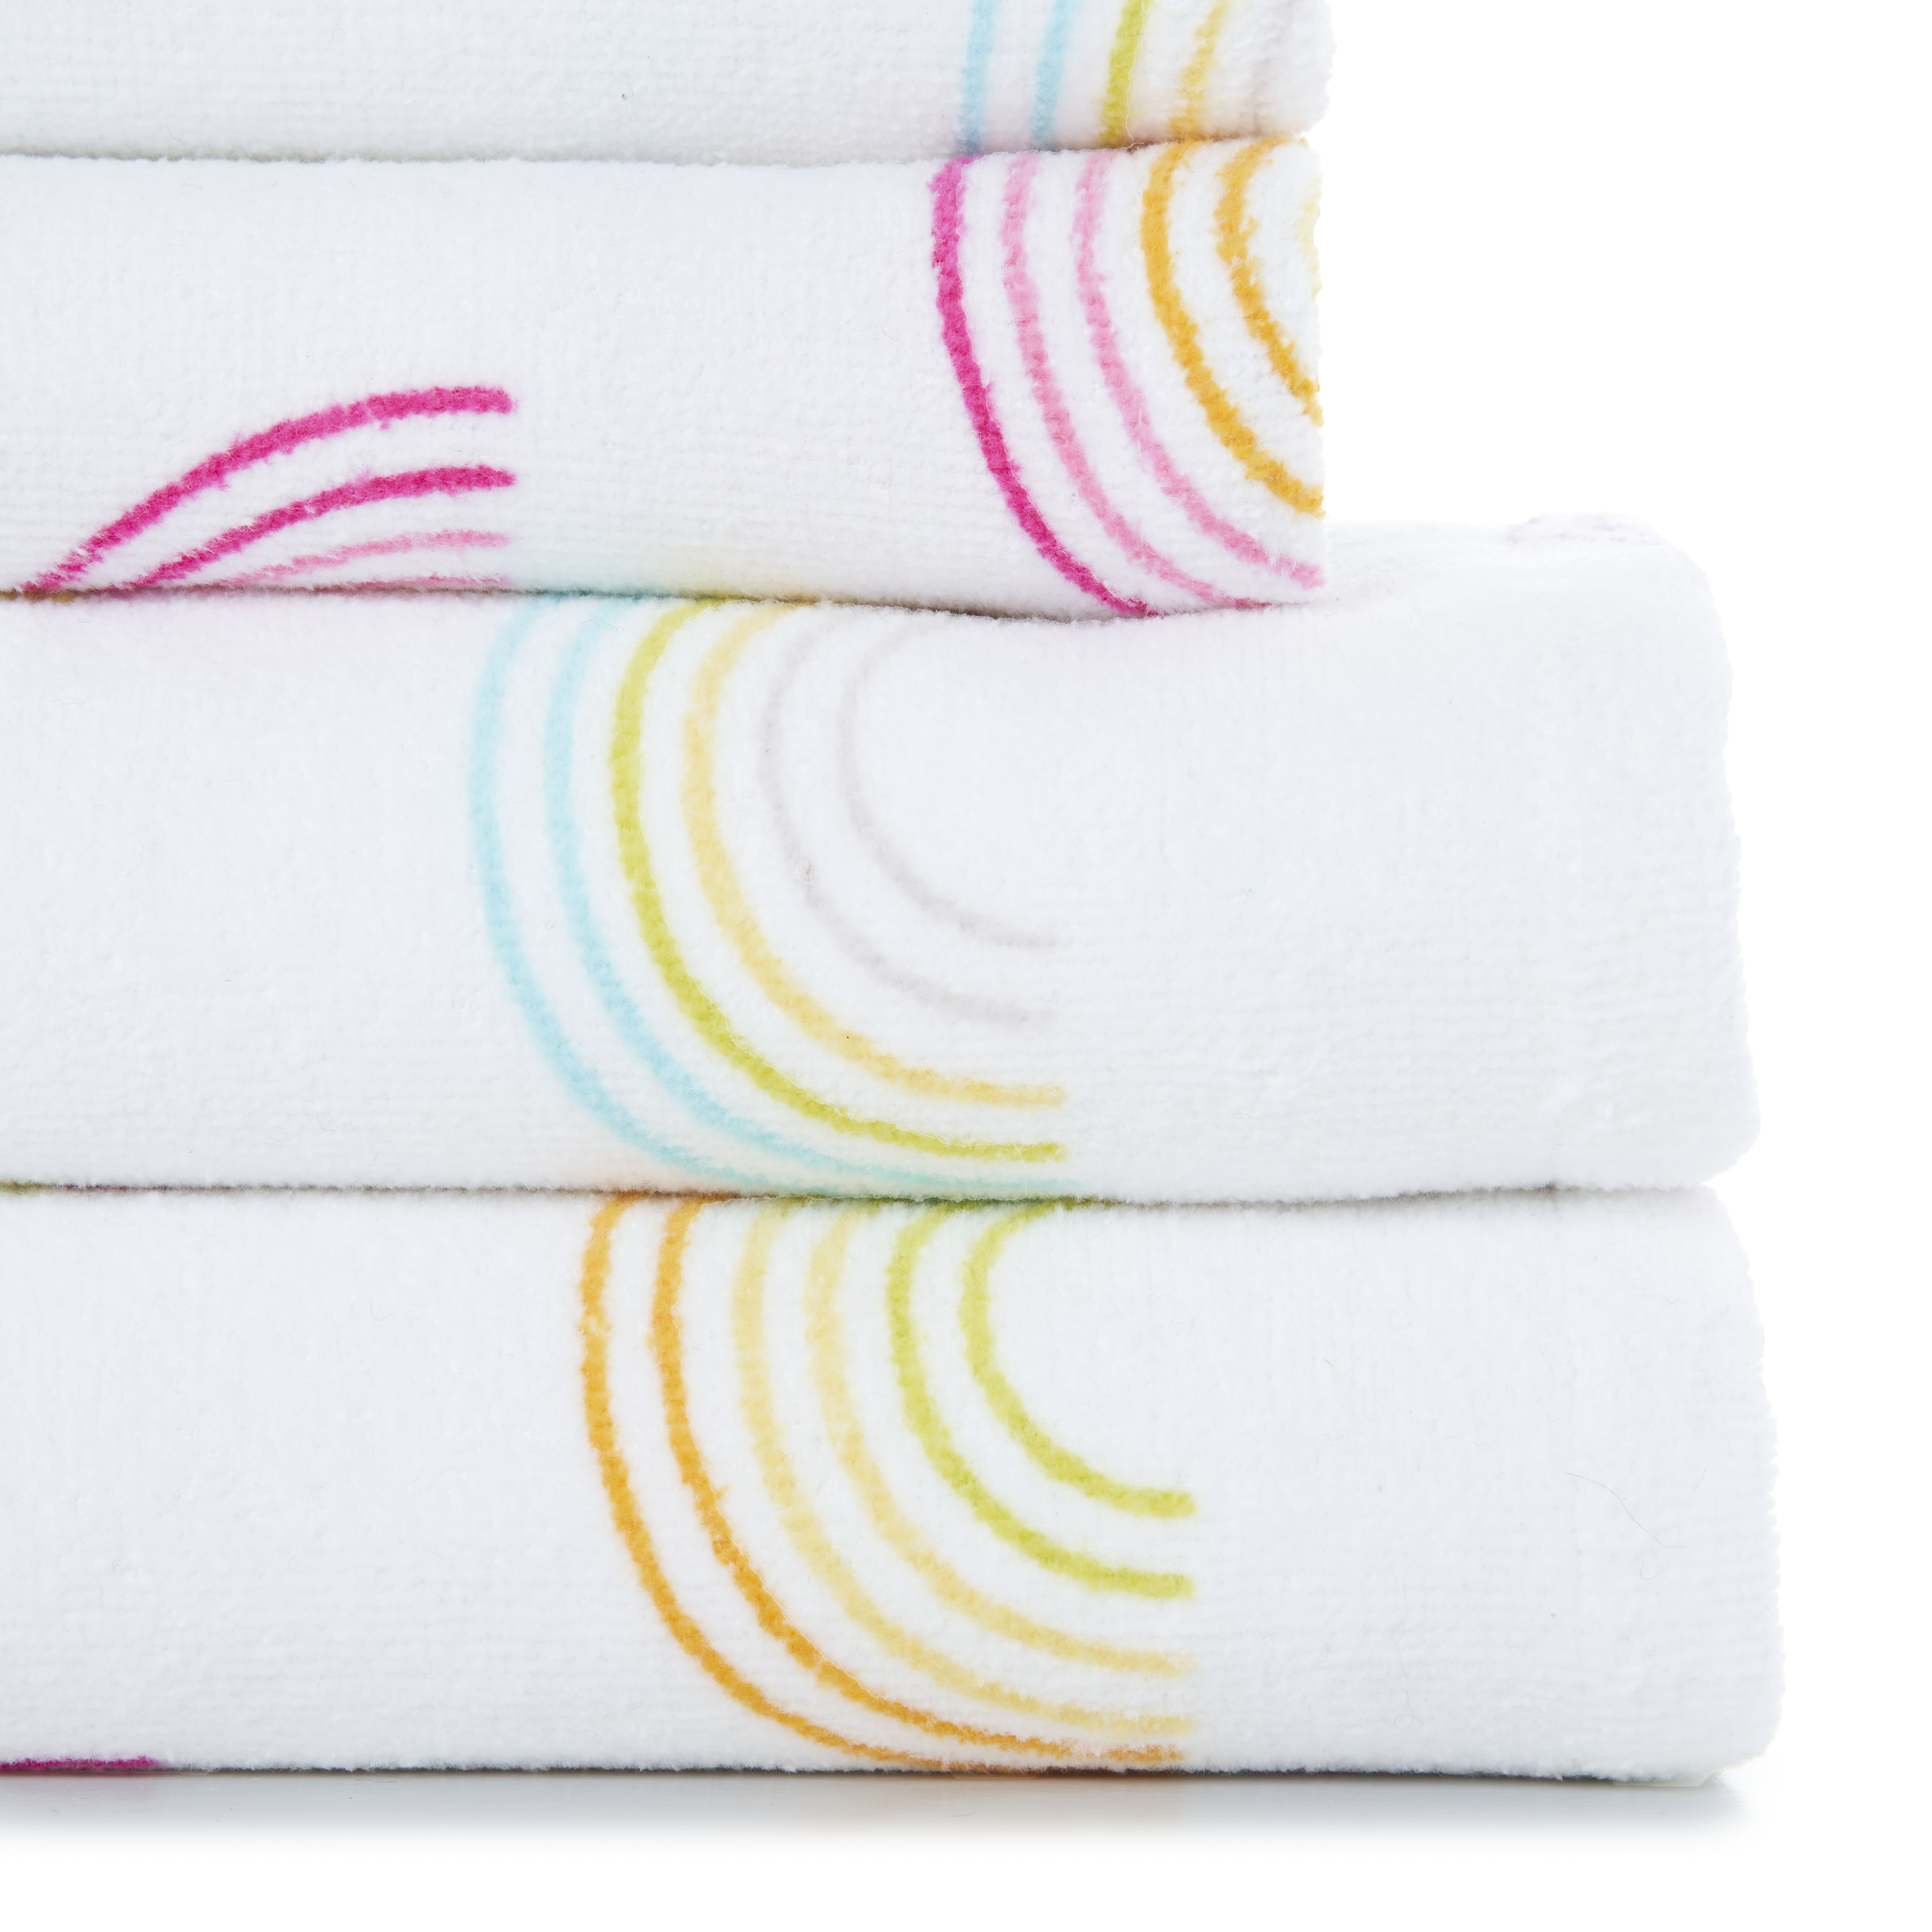 Gap Home Kids Rainbow Toss Organic Cotton 6 Piece Towel Set, White - image 5 of 5